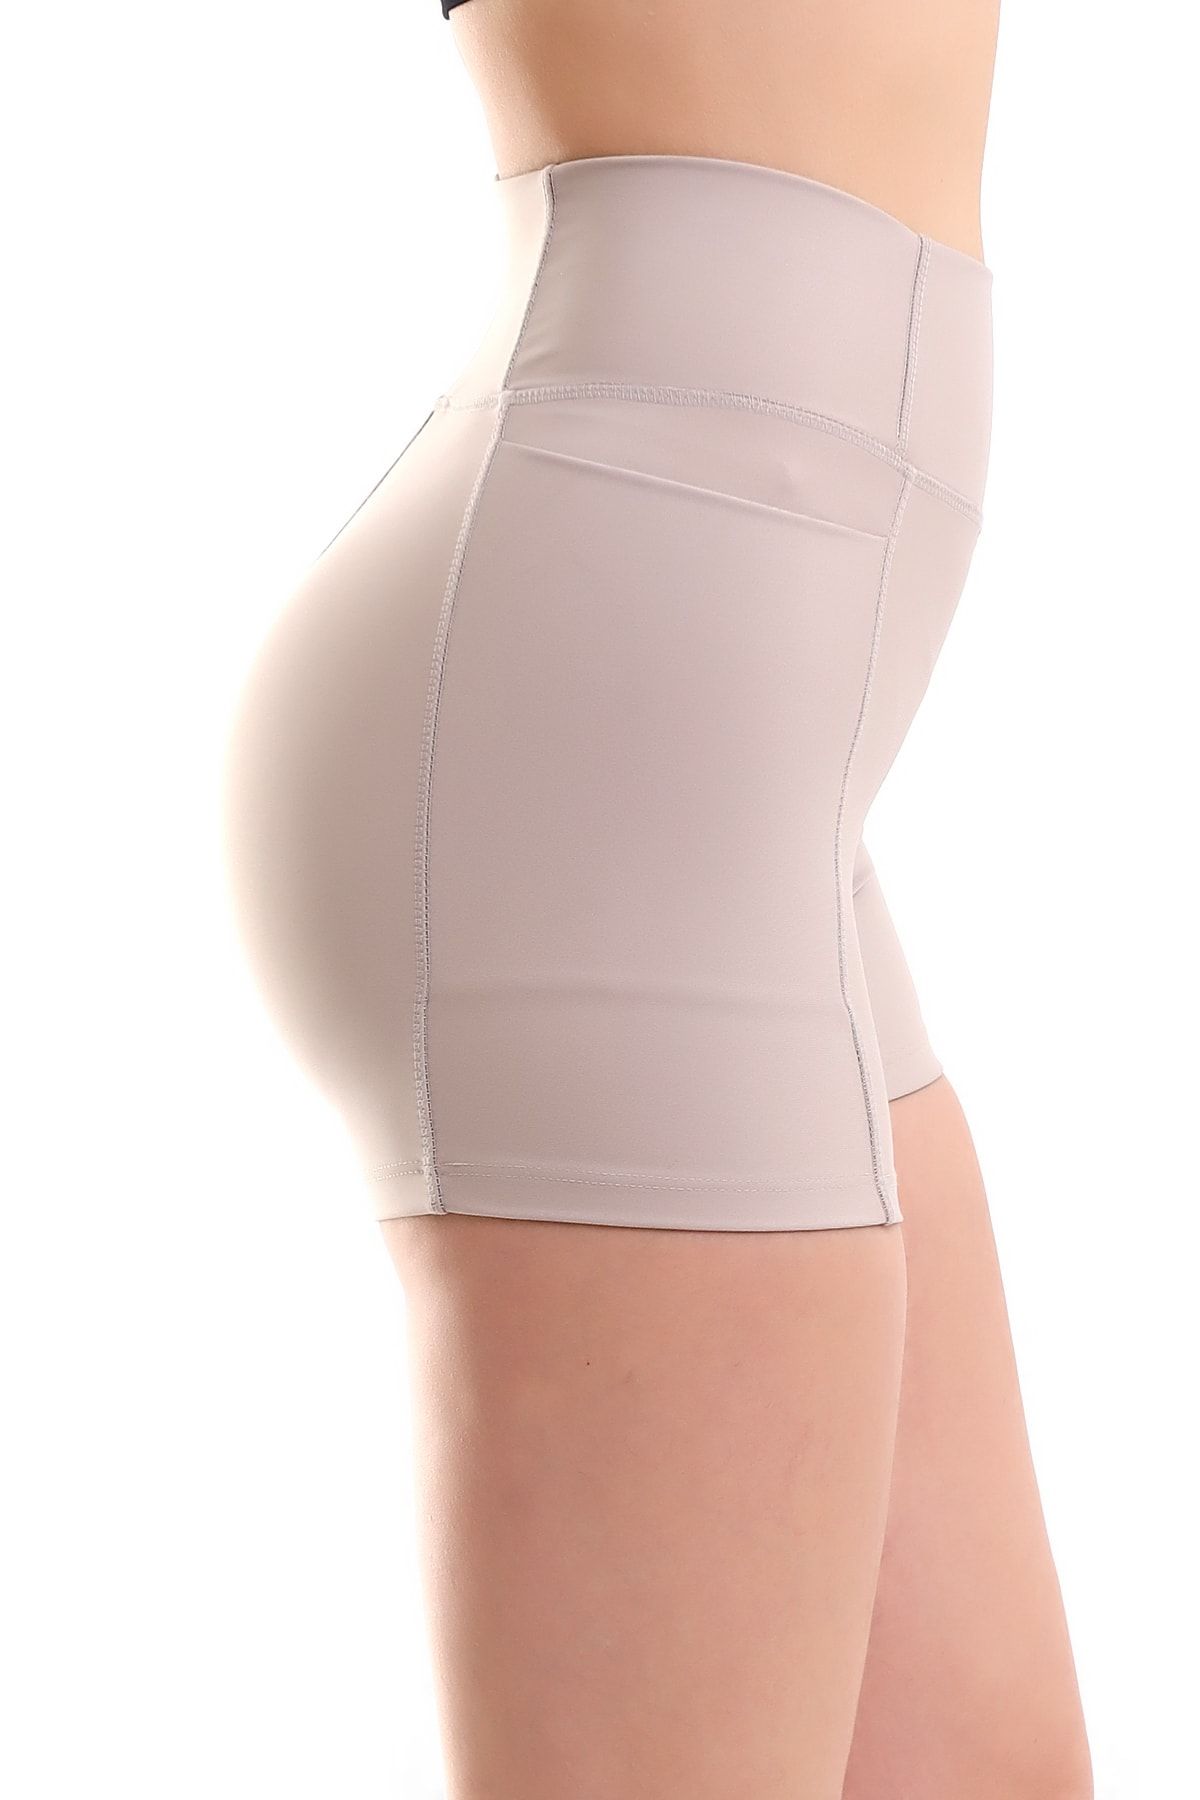 winmoda Kadın Cepli Tayt Şort Bej Rengi Korse Kumaş Sıkılaştırıcı Şort Tayt /sports Tıghts Shorts